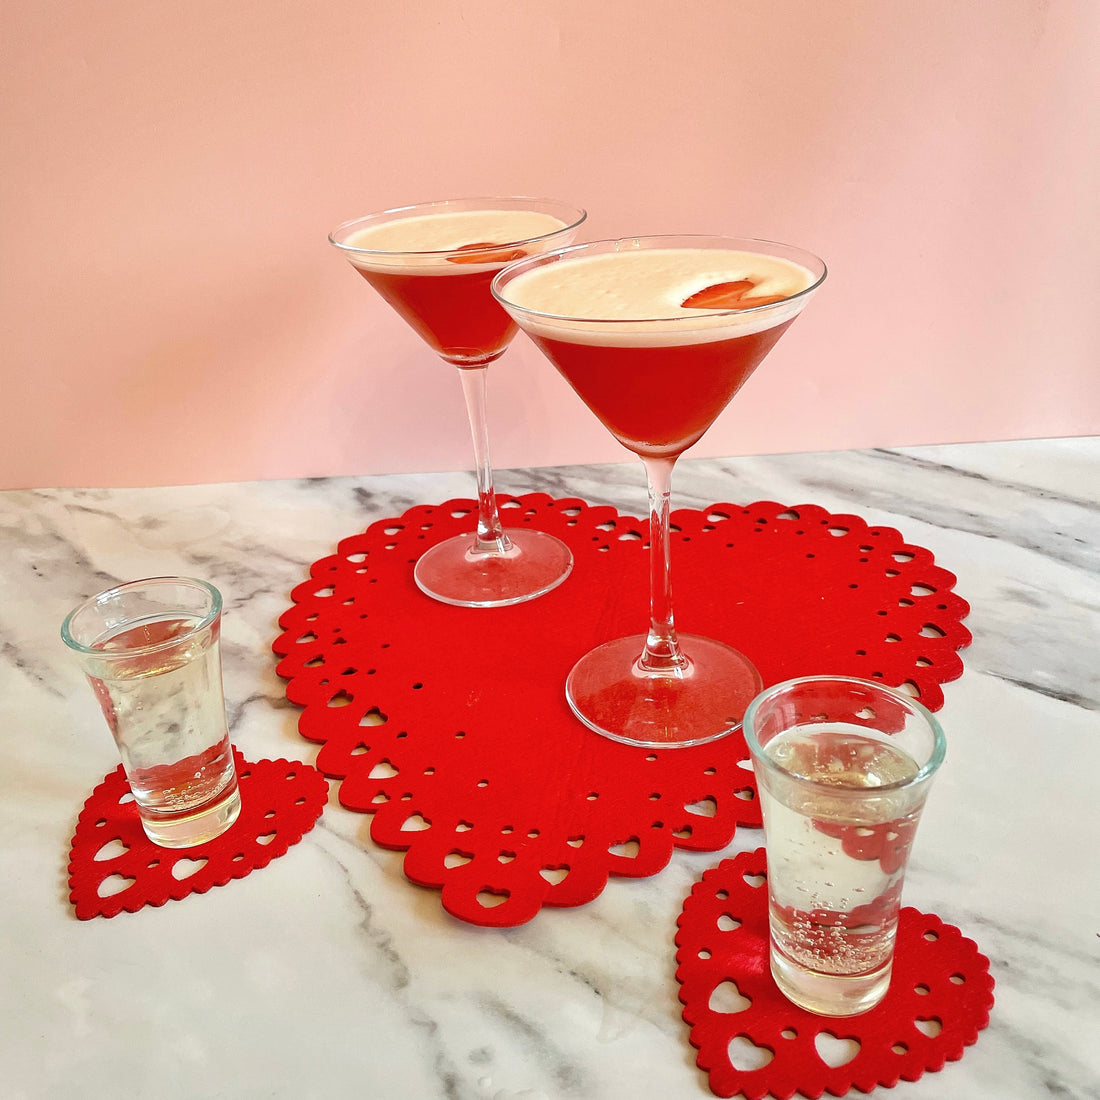 Our Valentines twist on a Pornstar Martini 💕